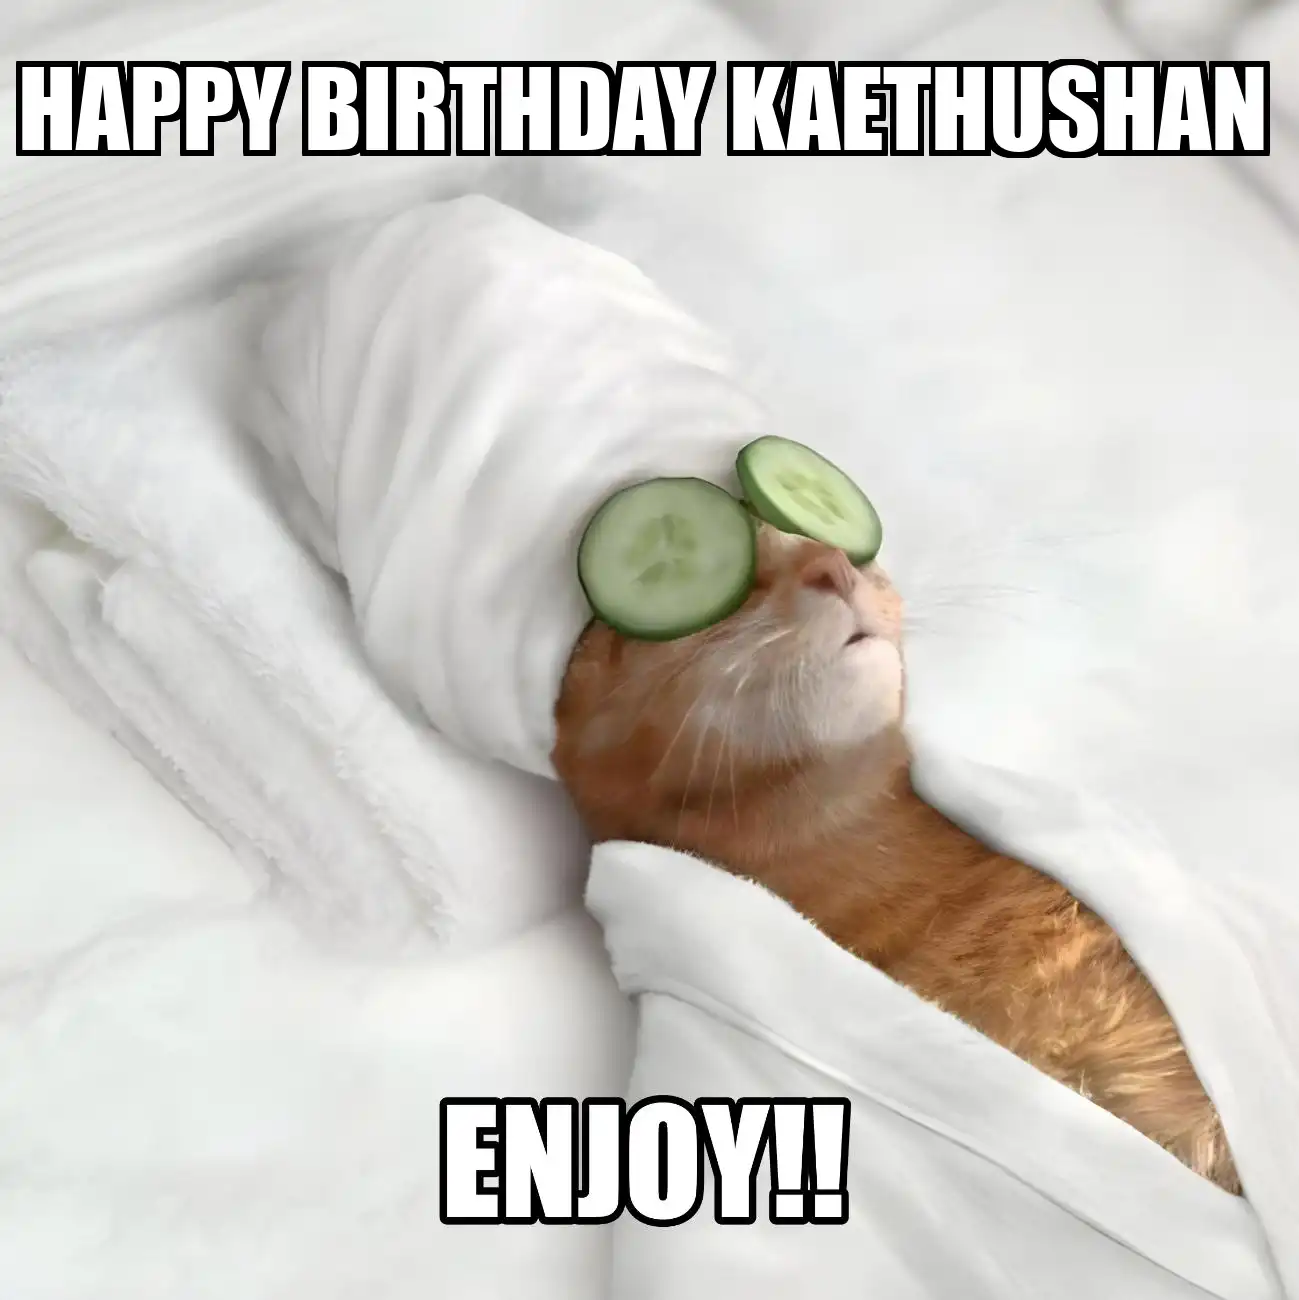 Happy Birthday Kaethushan Enjoy Cat Meme